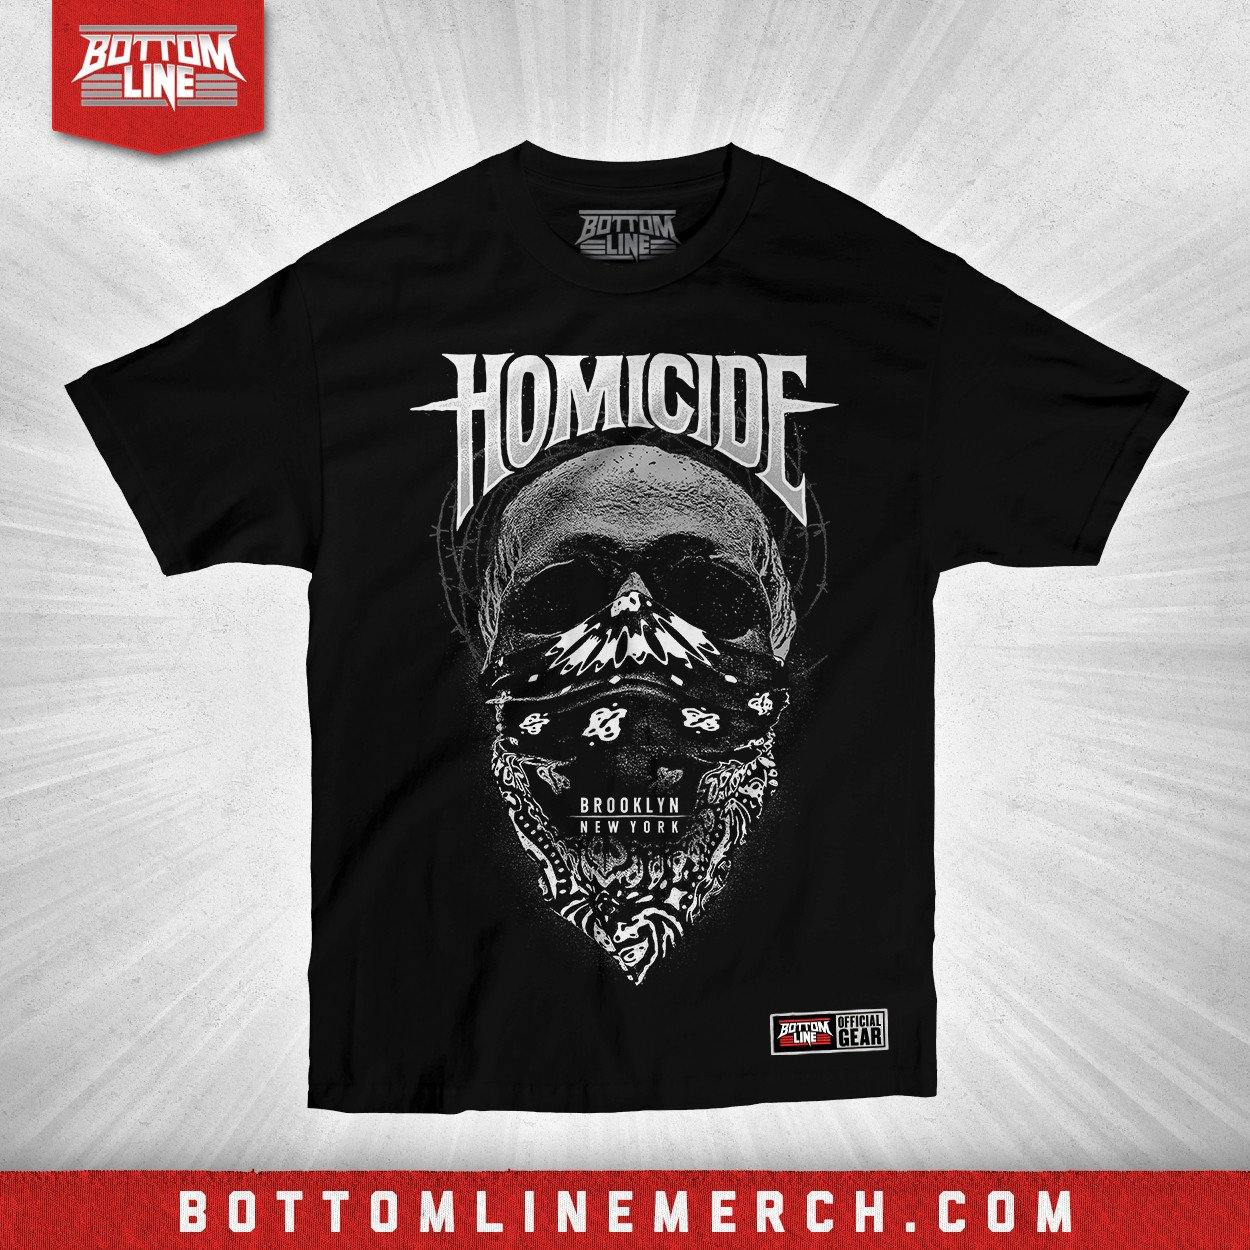 Buy Now – Homicide "Barbed Wire Skull" Shirt – Wrestler & Wrestling Merch – Bottom Line